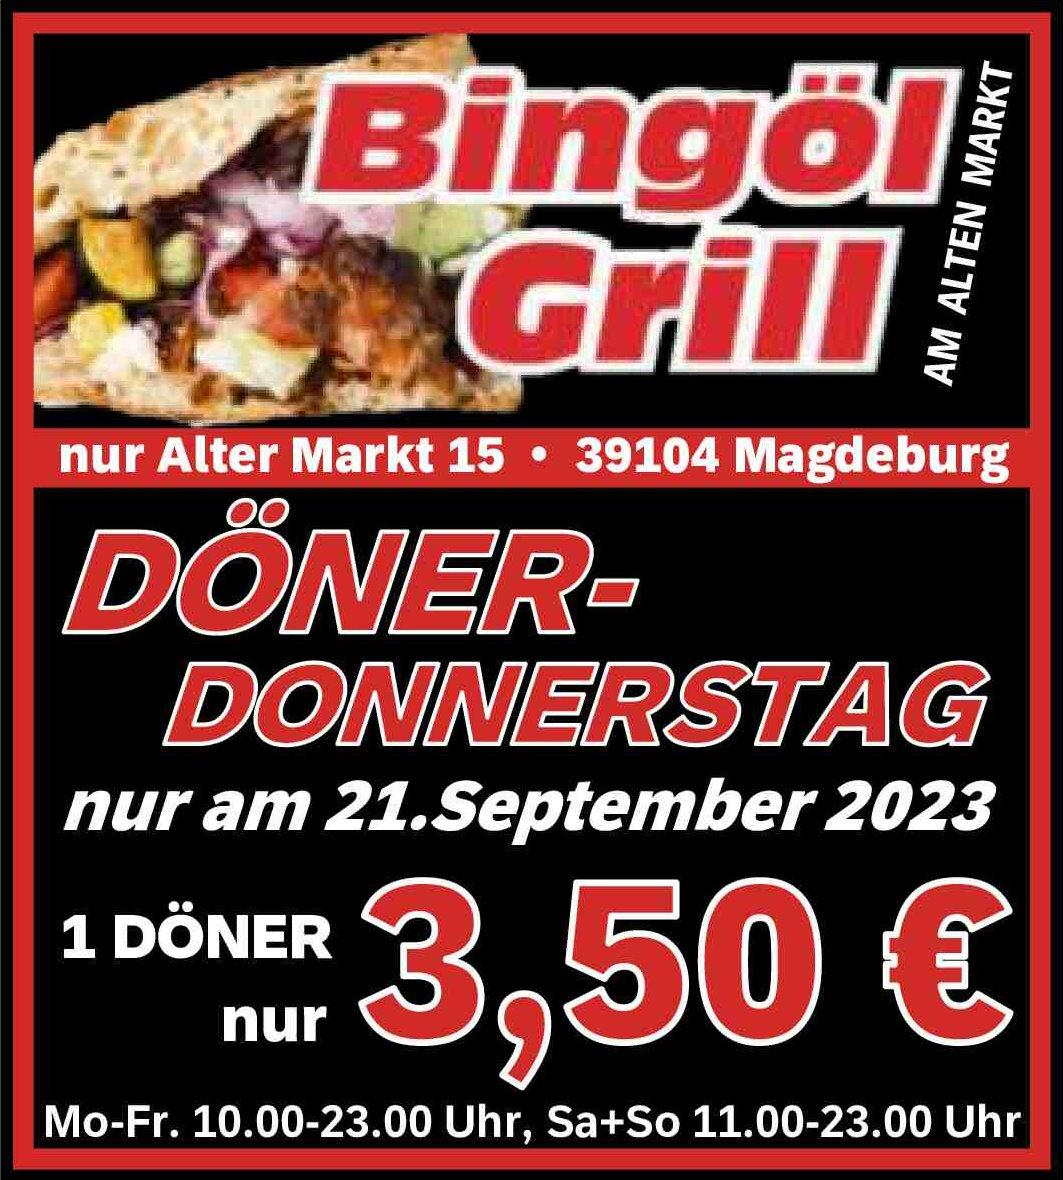 Döner Kebap 3,50 € beim Bingöl-Grill Alter Markt am Donnerstag, 21. September